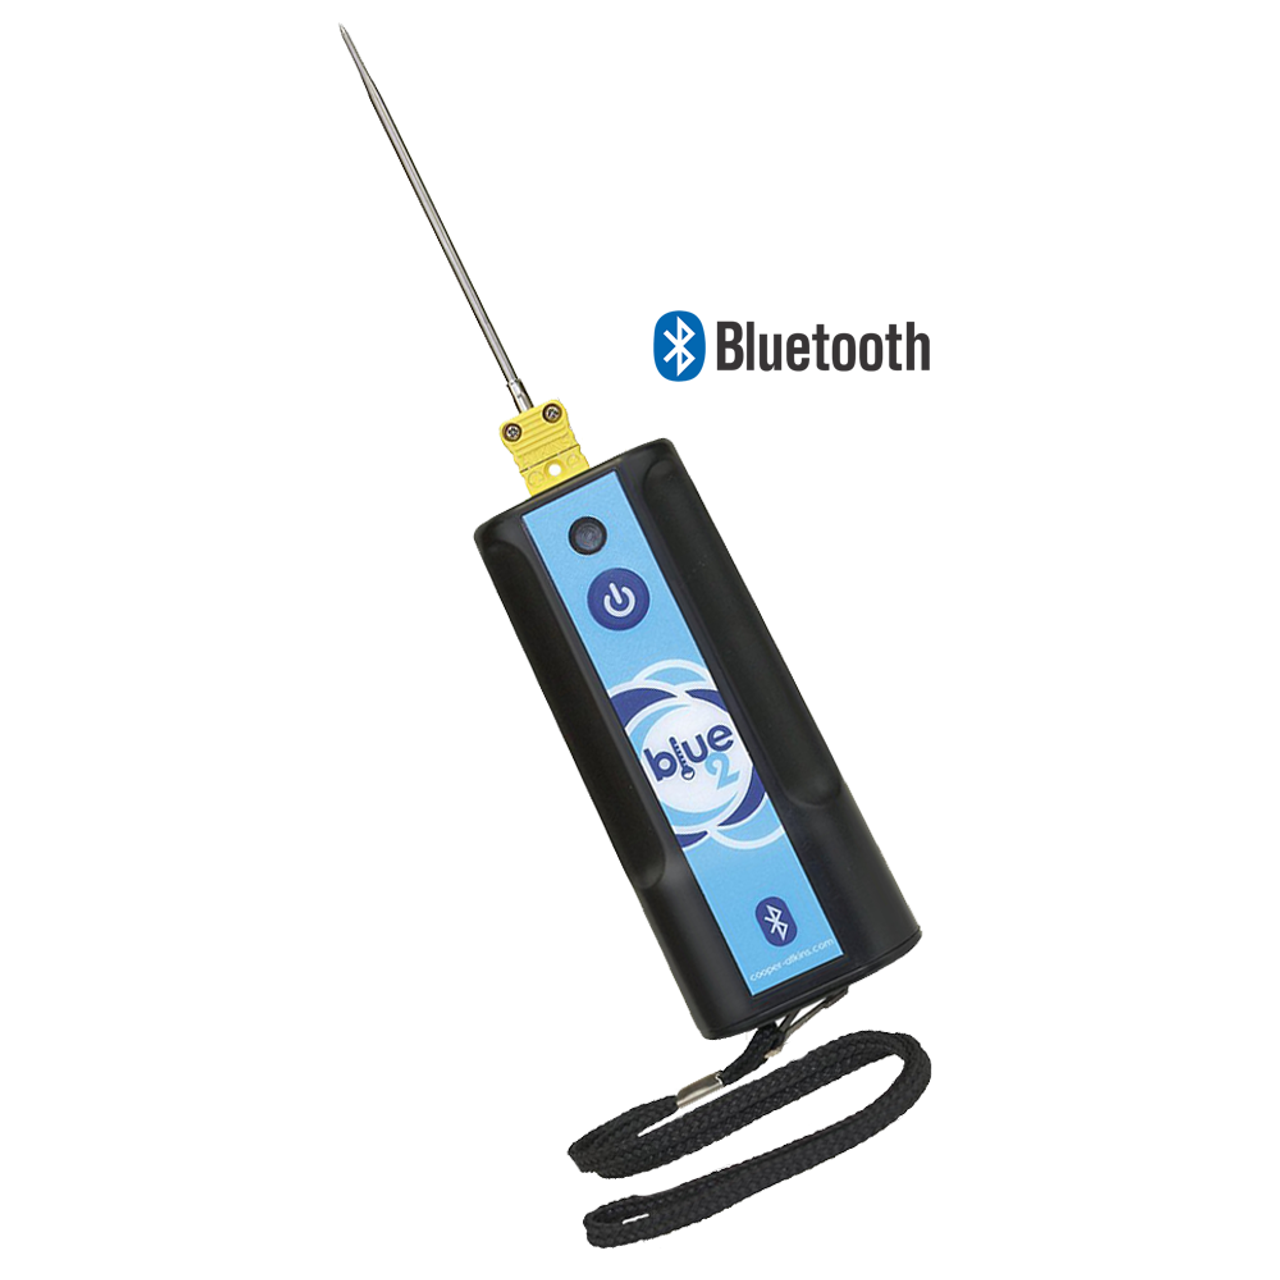 Data Harvest - Wireless Temperature Sensor (Bluetooth)